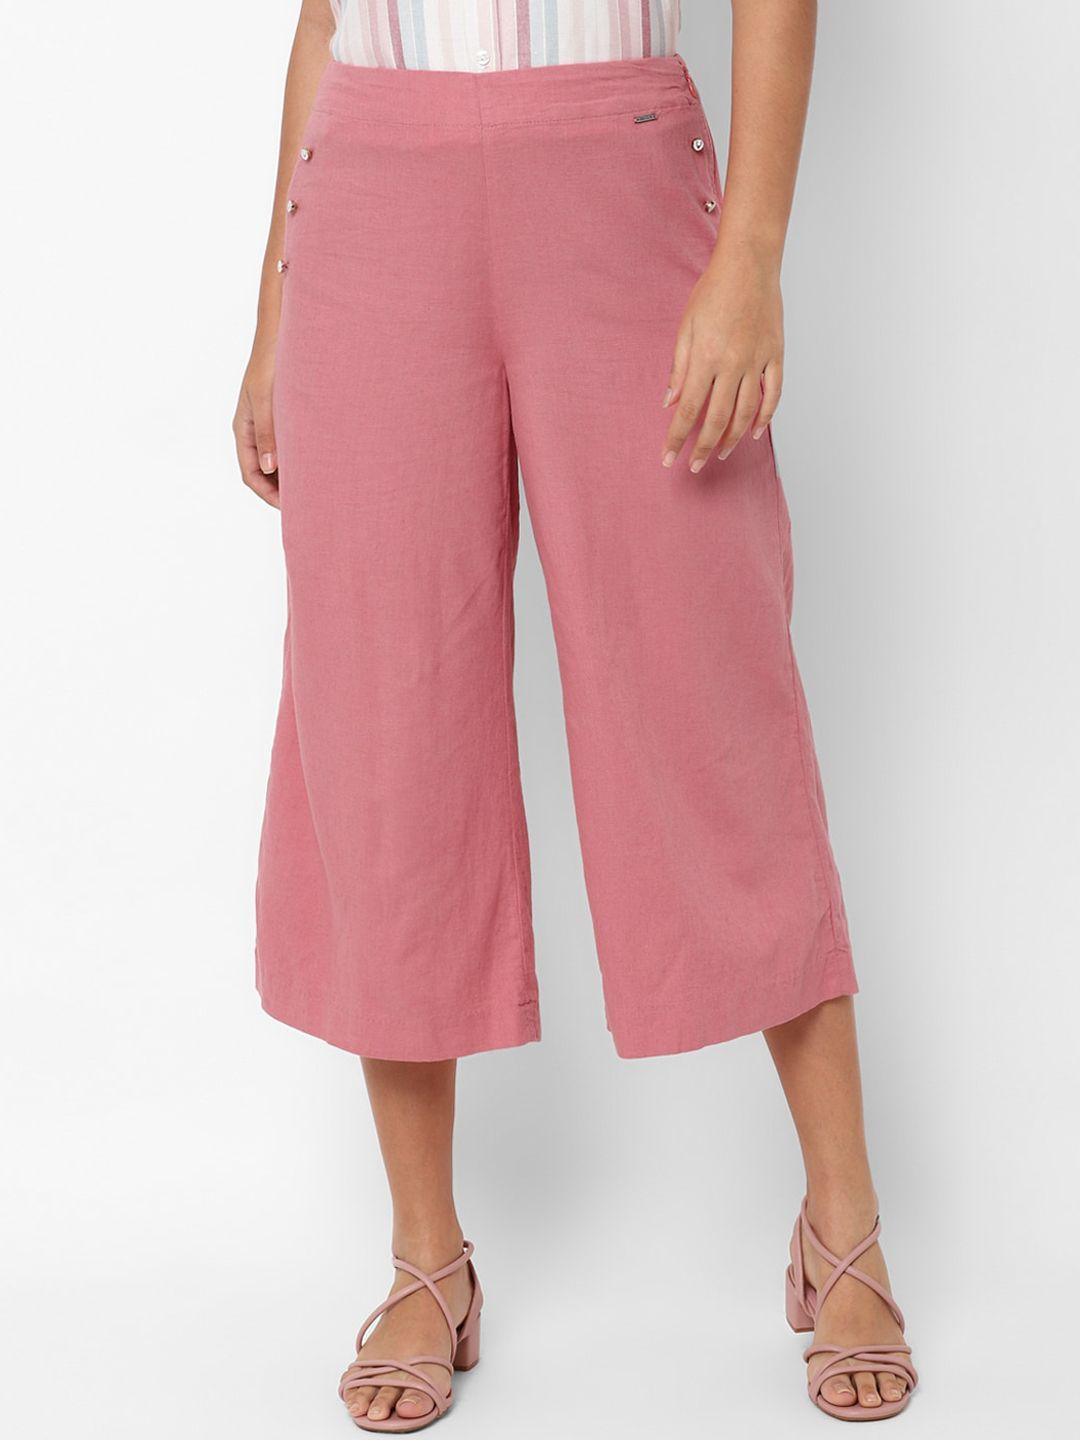 allen solly woman women pink culottes trousers